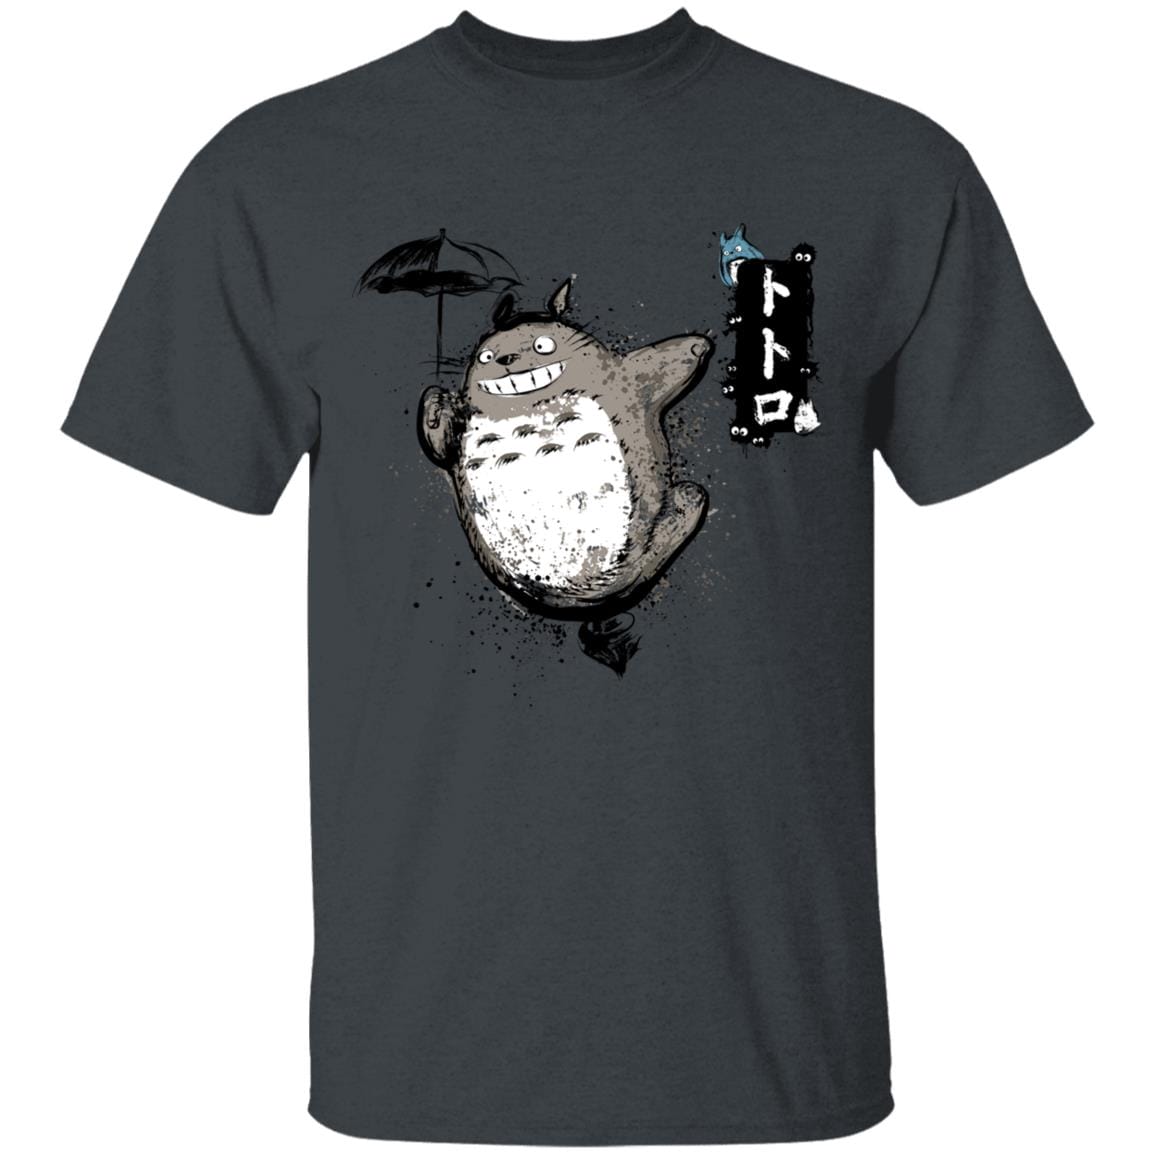 Spinning Totoro T Shirt Ghibli Store ghibli.store